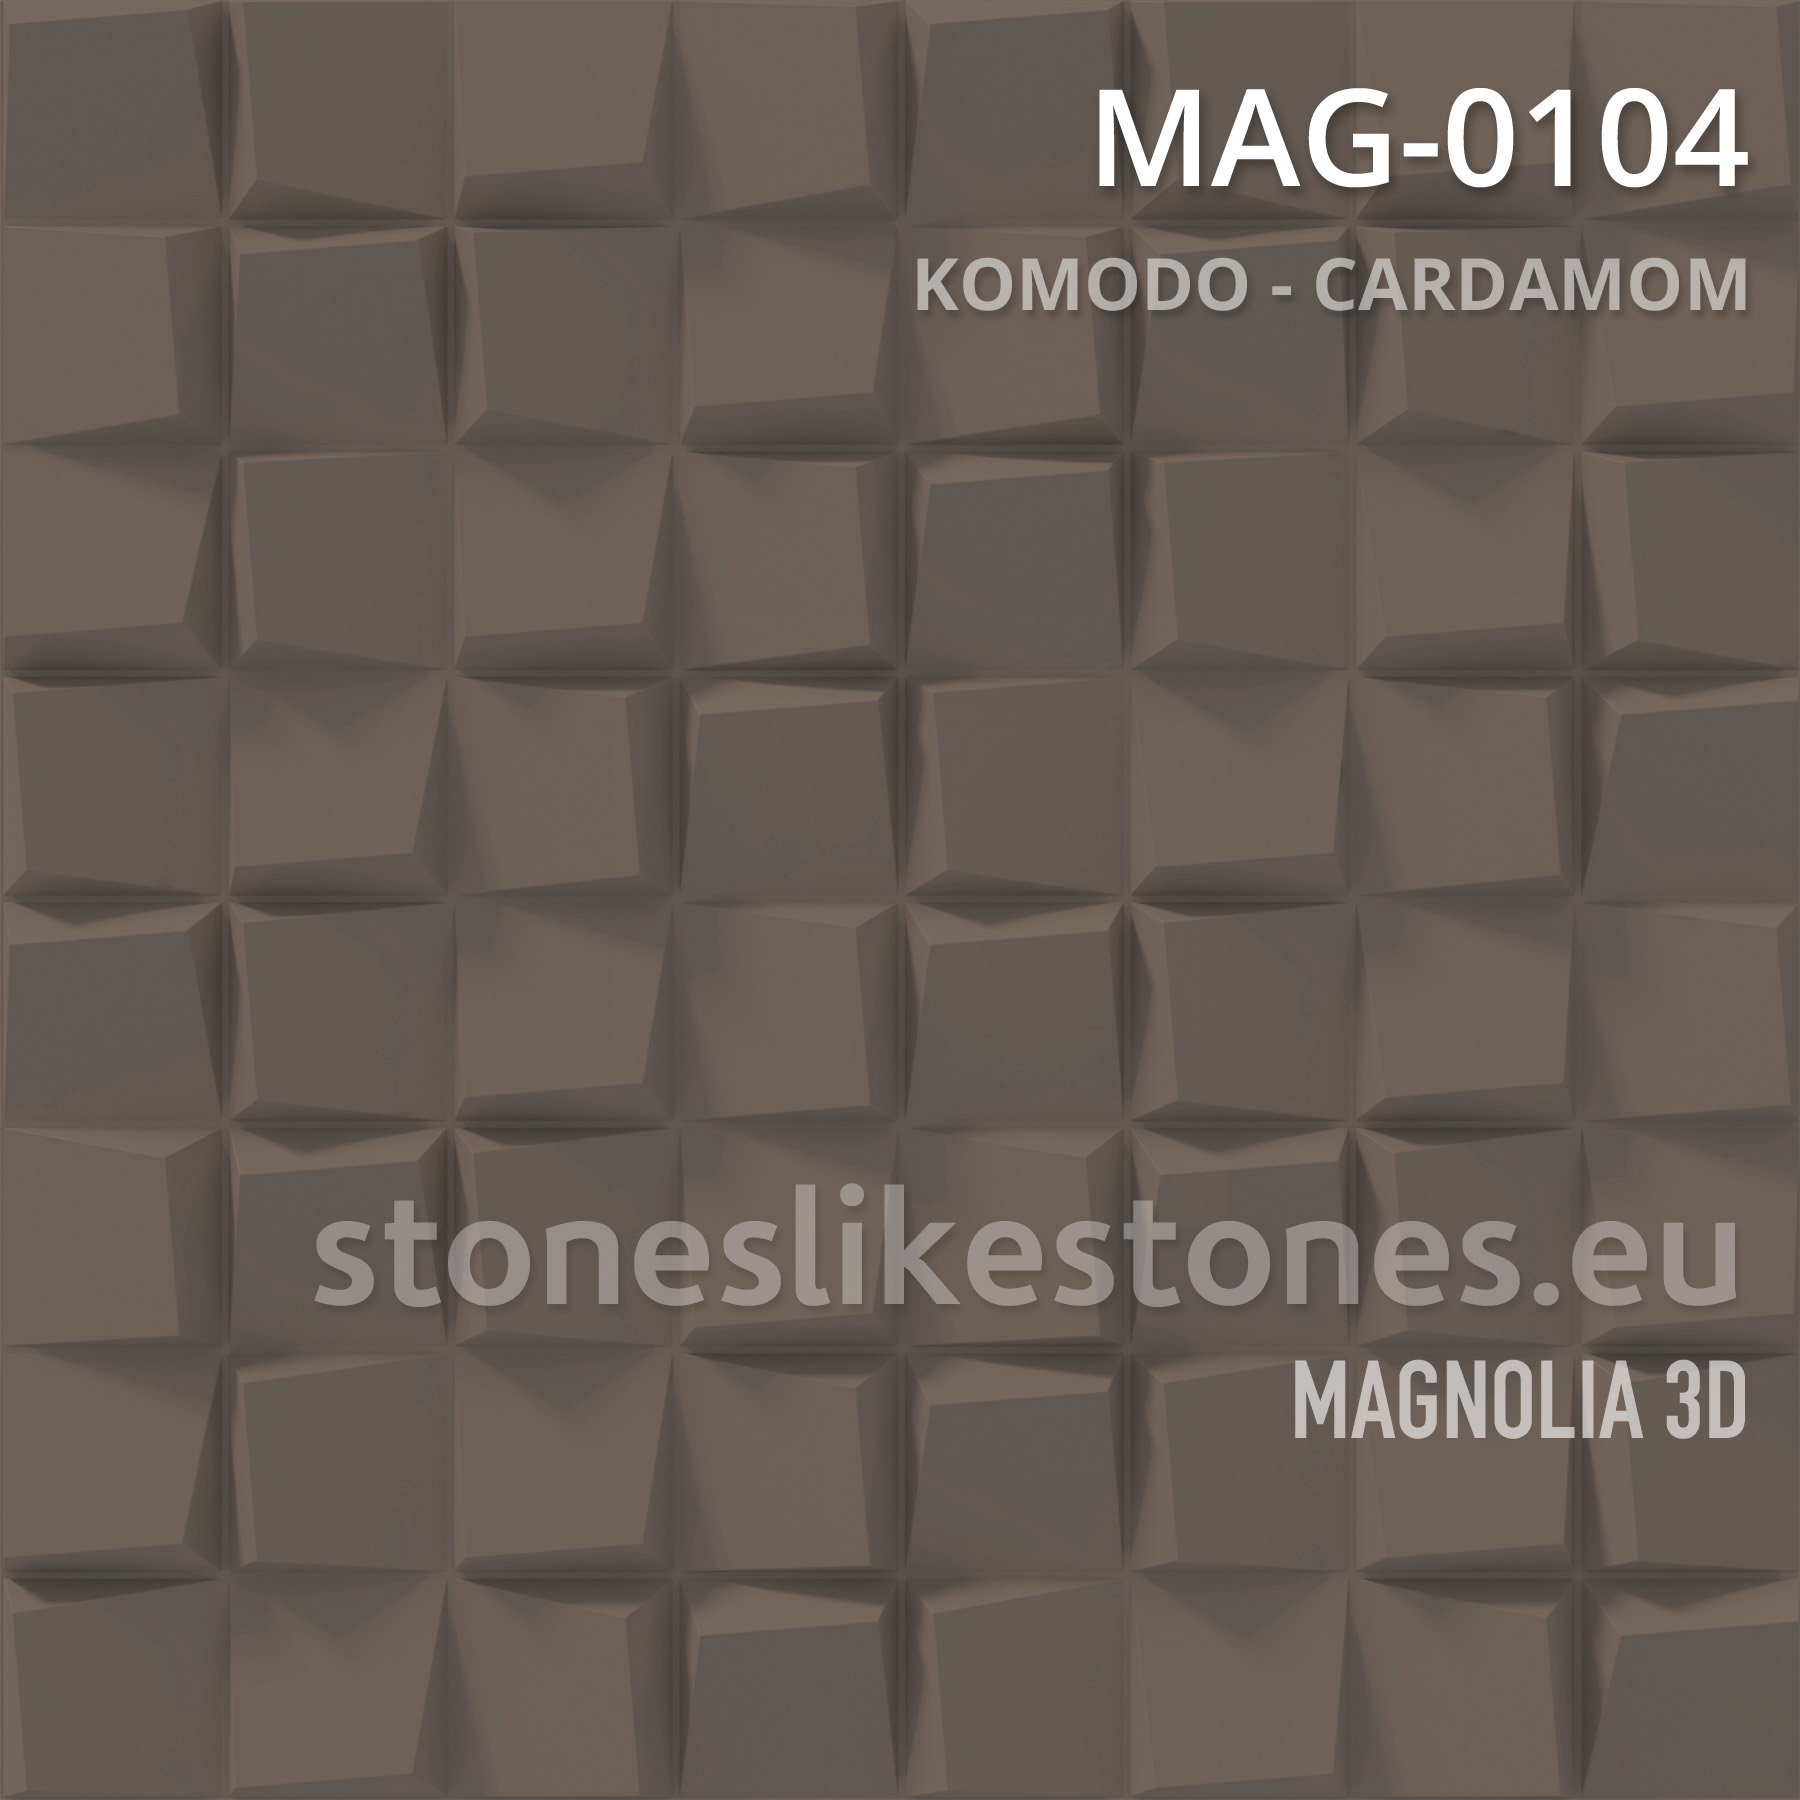 Magnolia 3D – MAG-0104 KOMODO – CARDAMOM